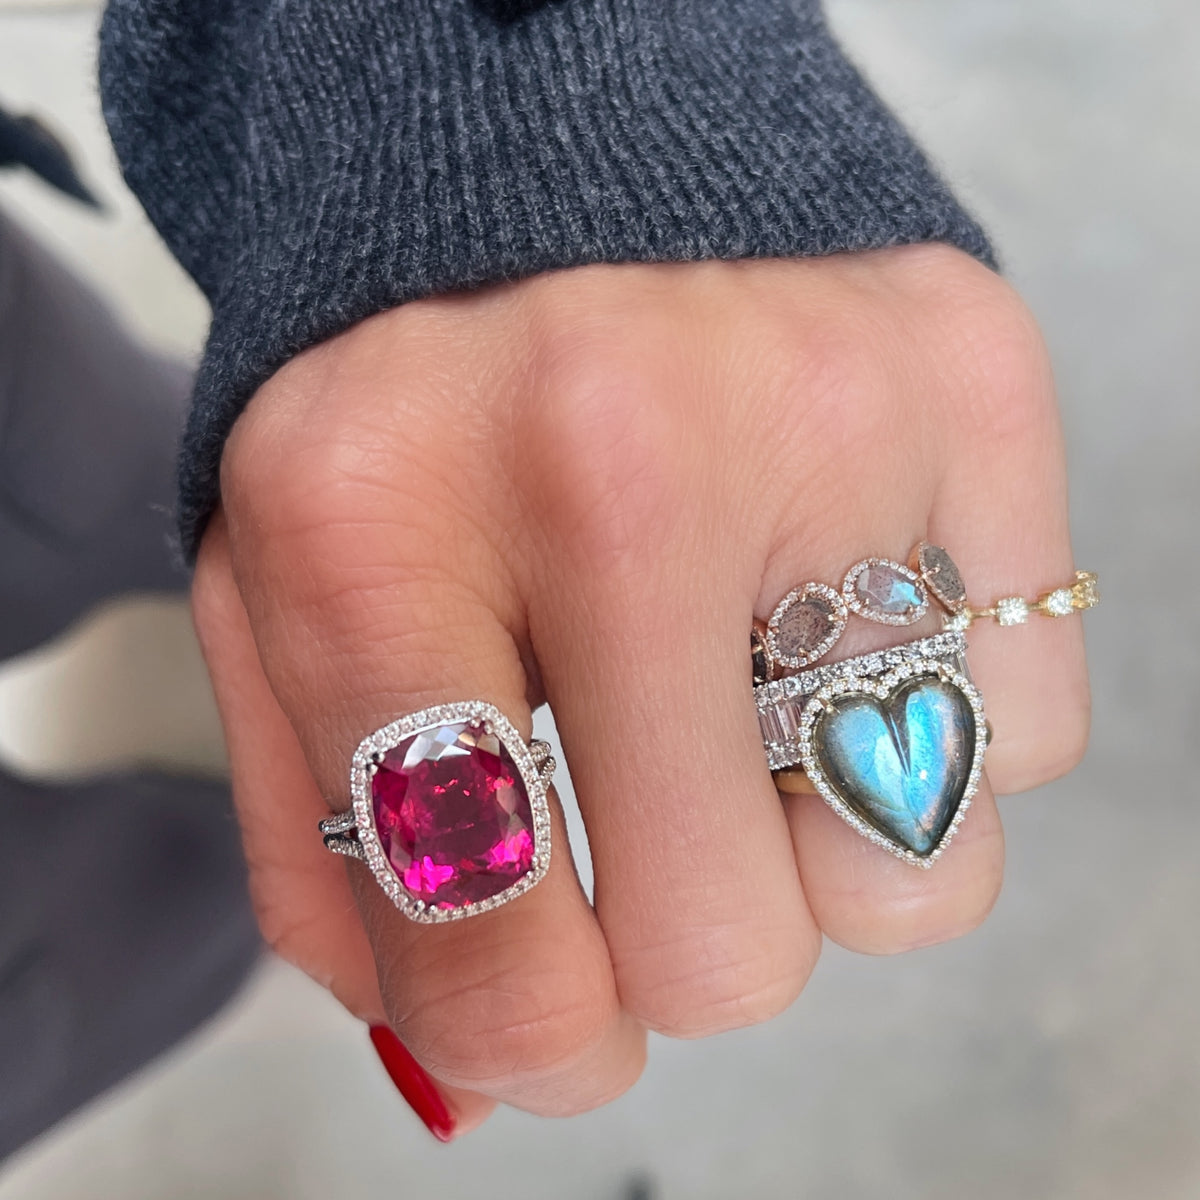 Labradorite King 👑 on Instagram: Guide for Baby pink gemstones